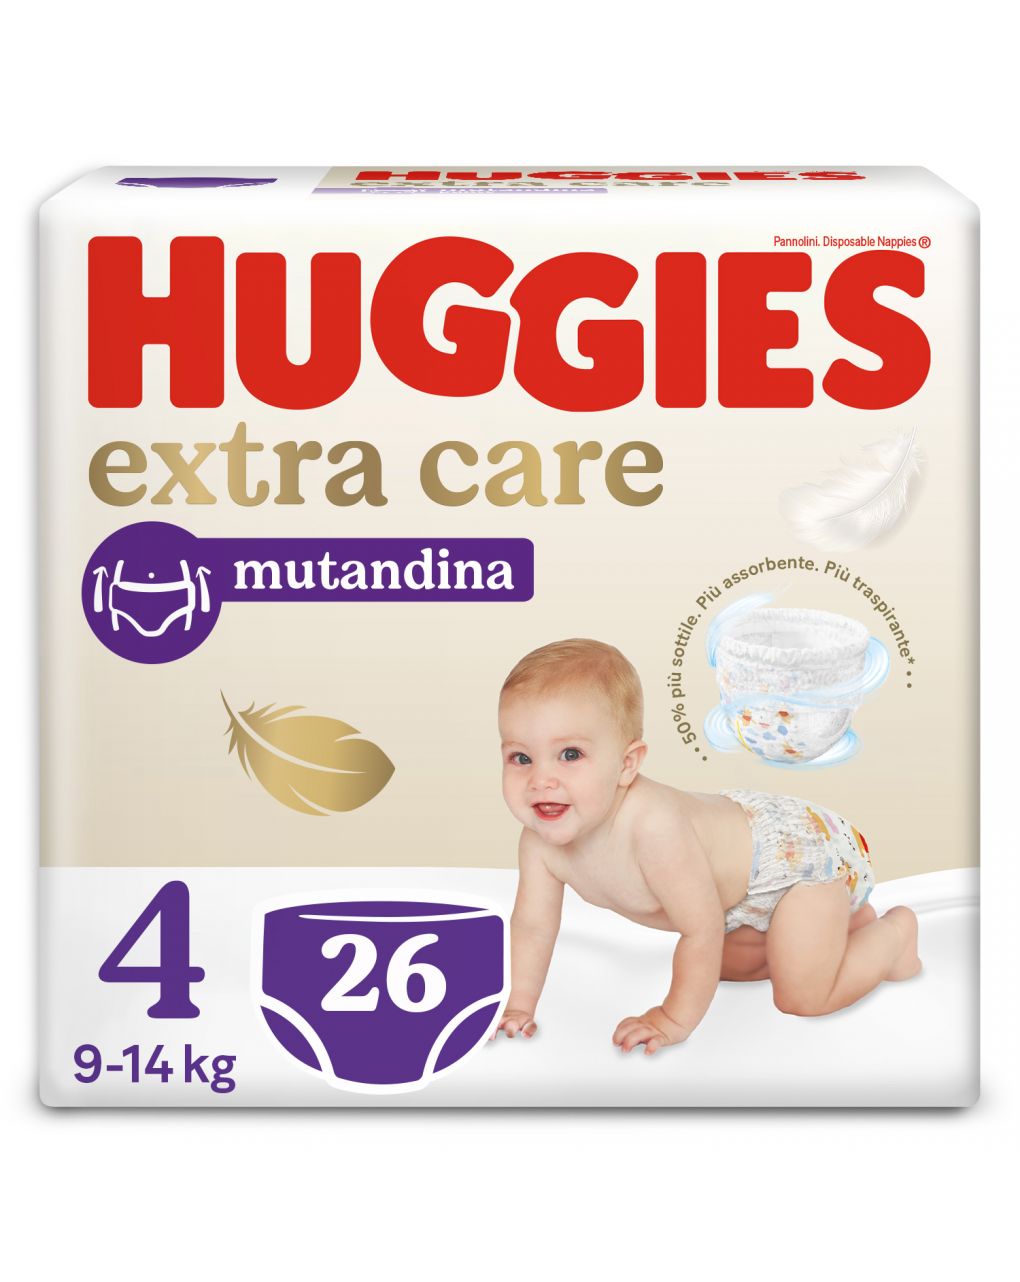 Pannolini huggies extra care mutandina tg. 4 (9-14 kg) - formato da 26 pannolini